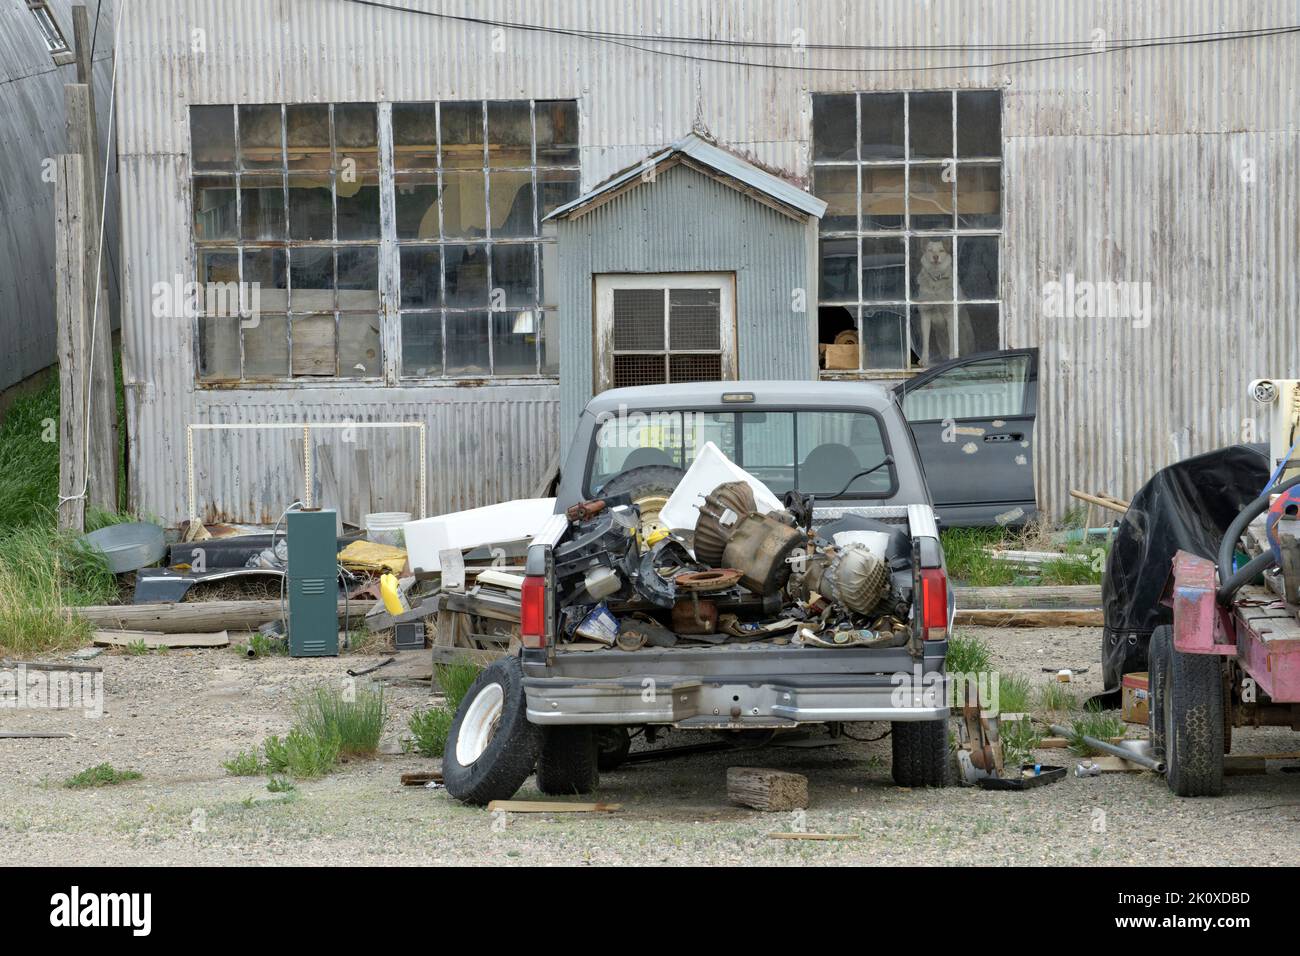 USA, Wyoming, Rawlins, old warehouse and dog Stock Photo